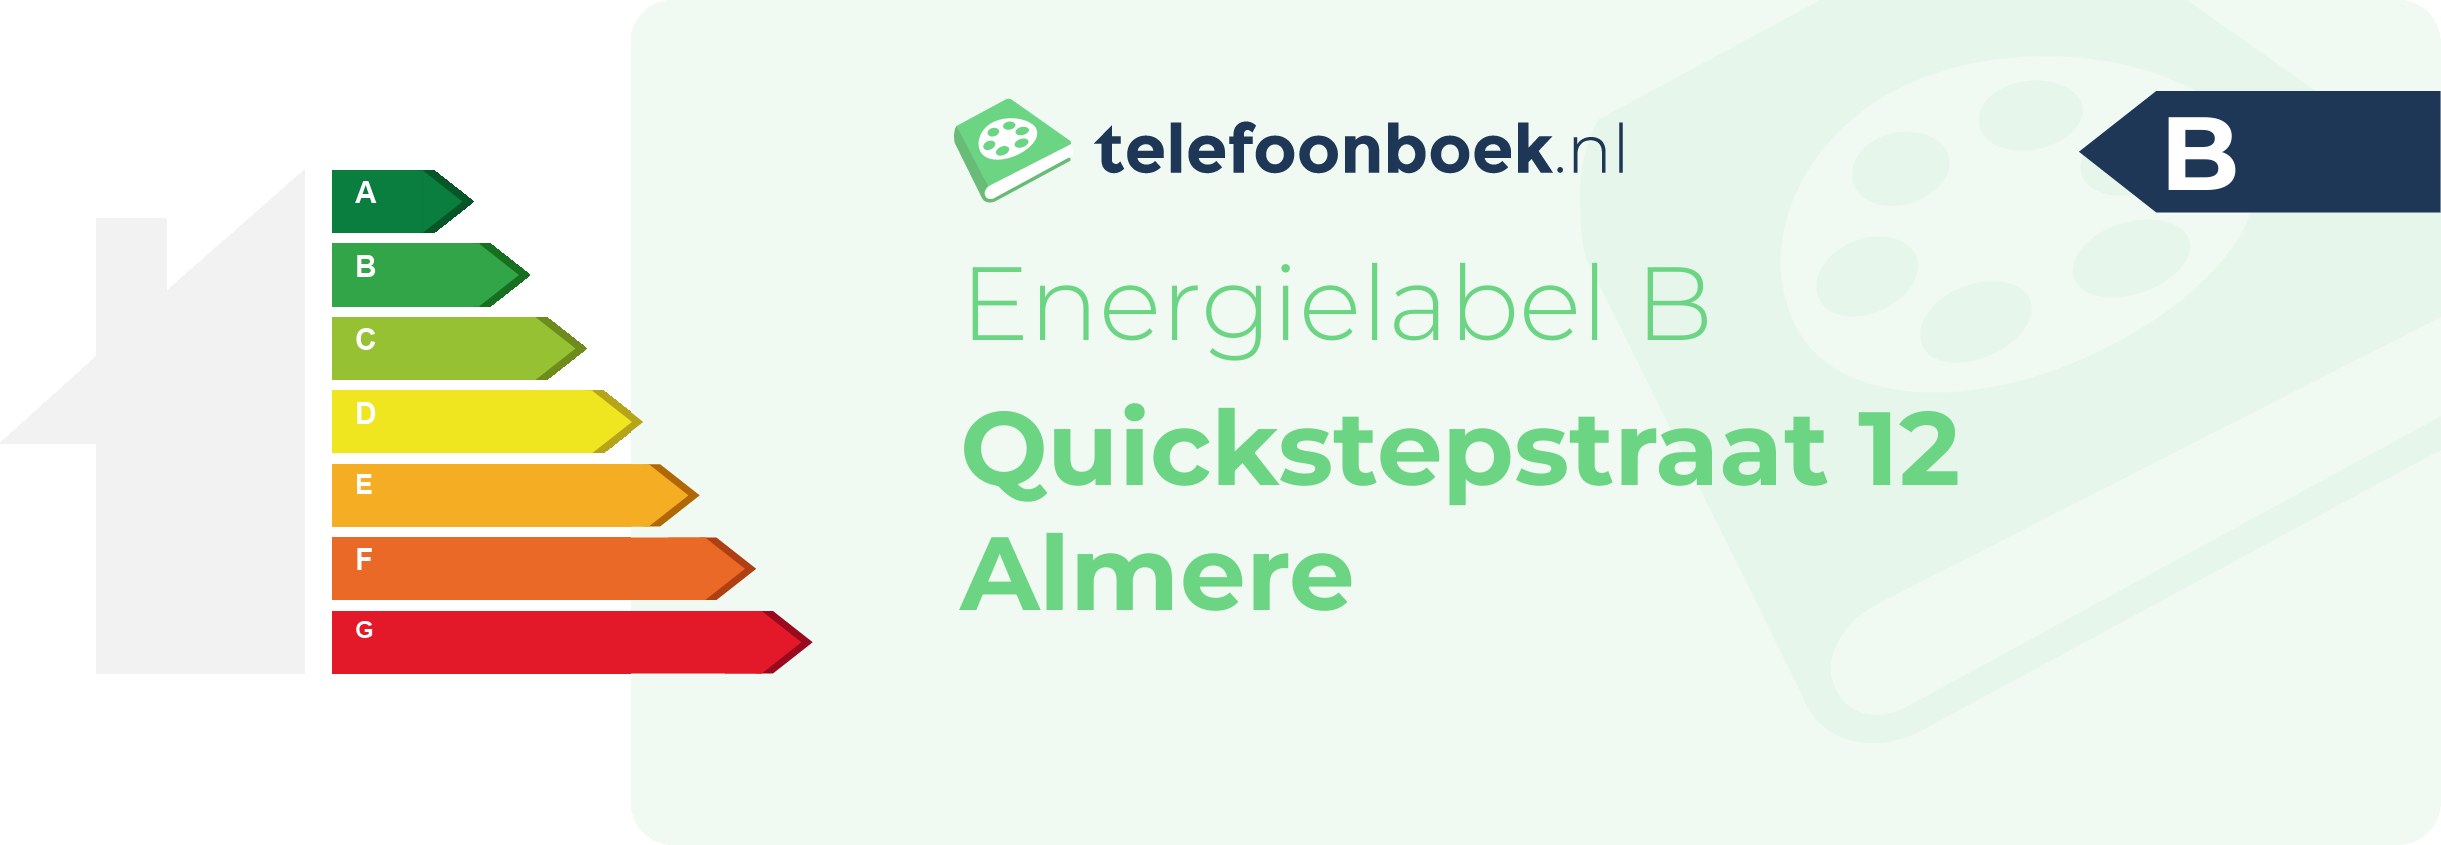 Energielabel Quickstepstraat 12 Almere